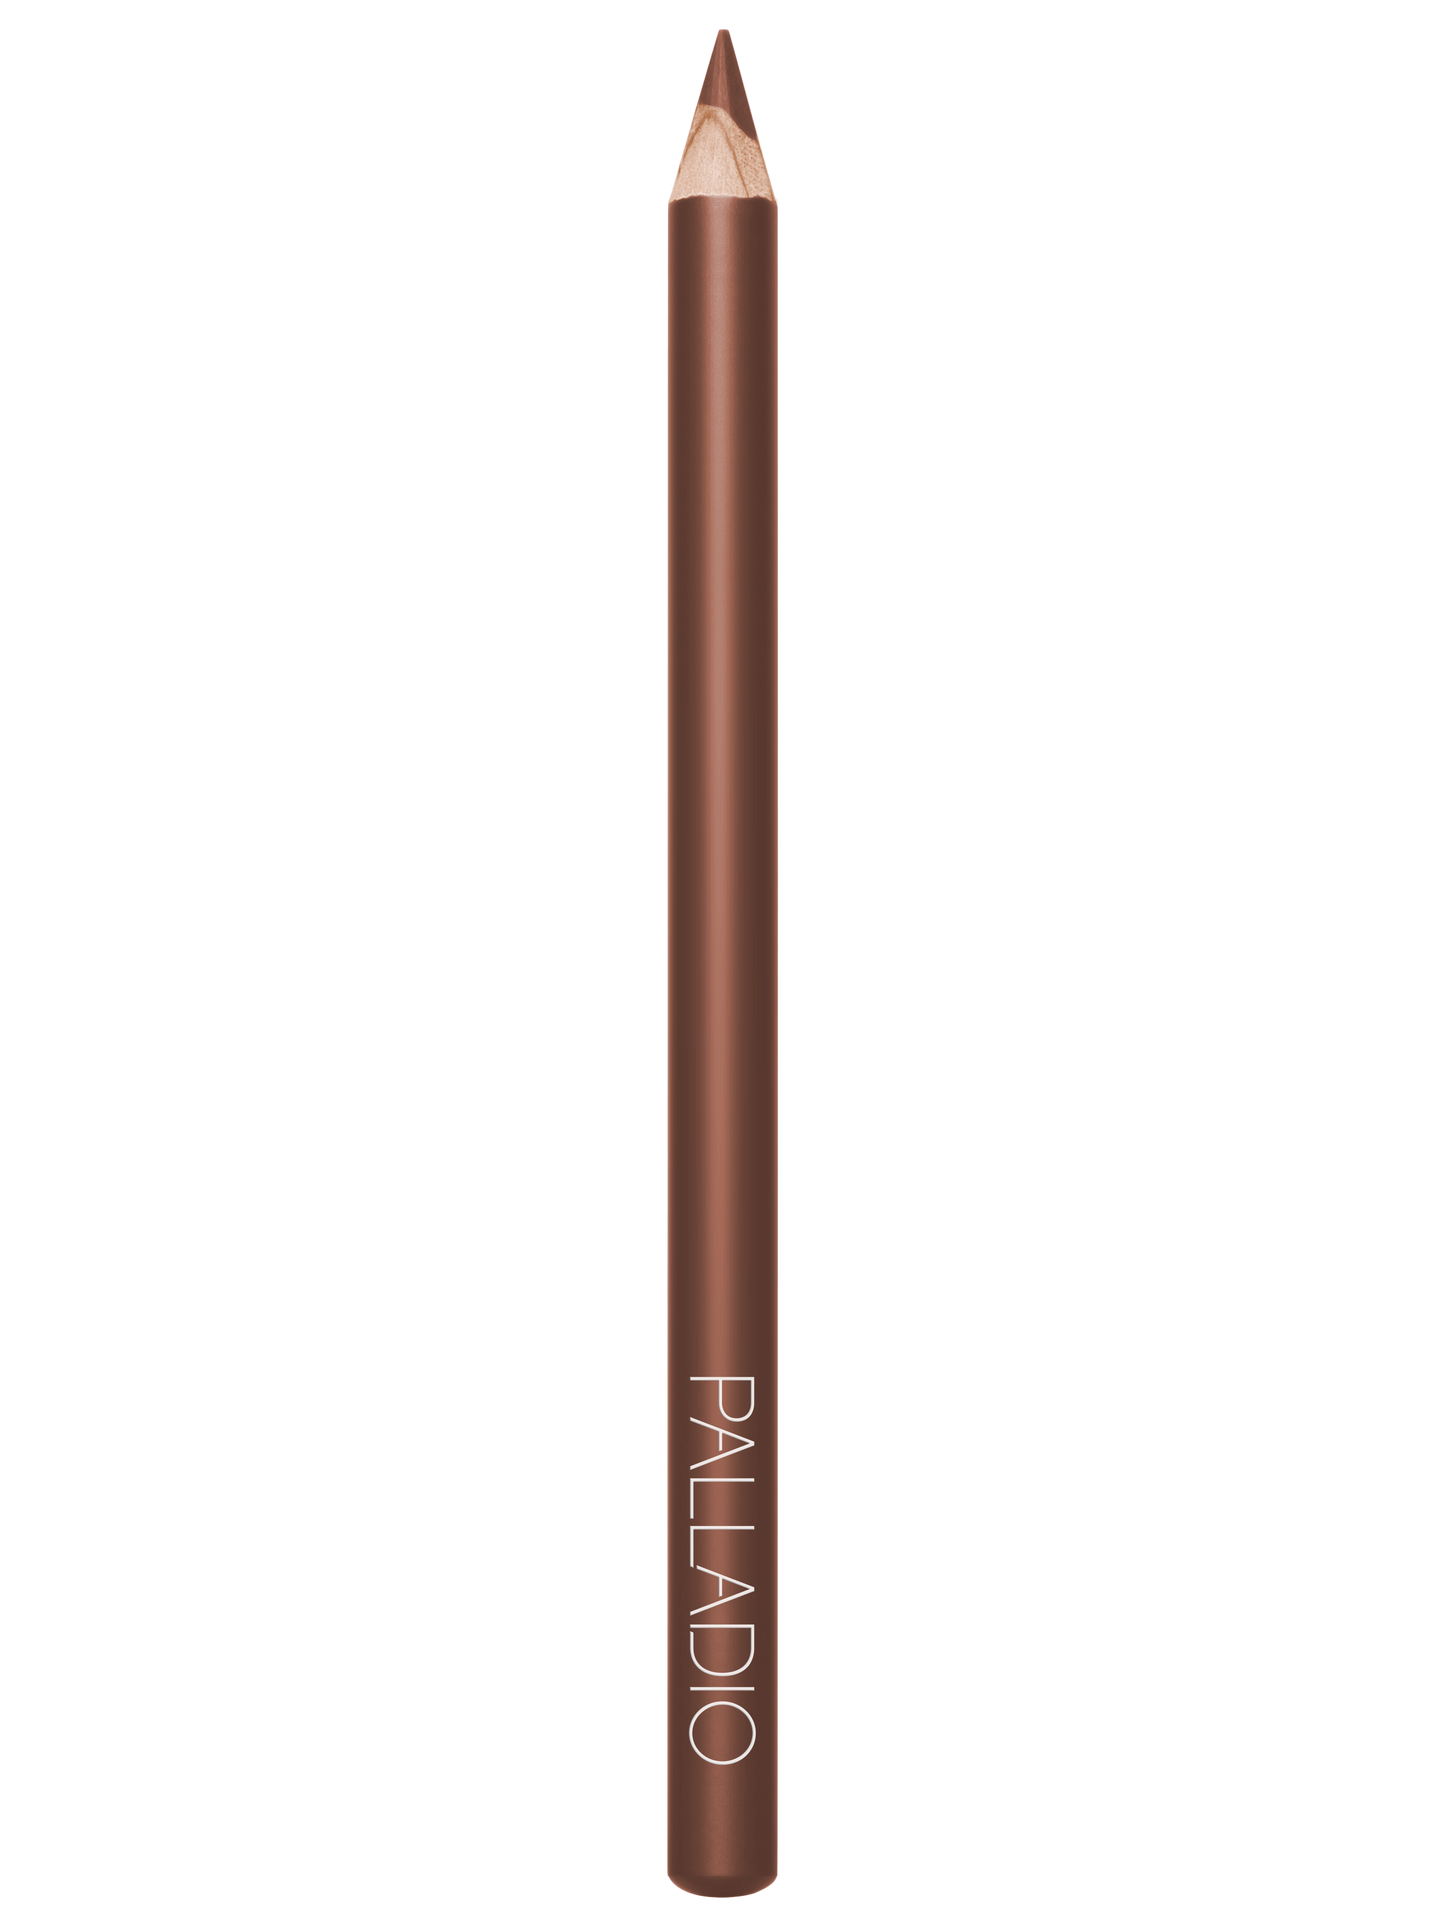 Palladio Lipstick Liner PencilLip LinerPALLADIOColor: Natural Ll295